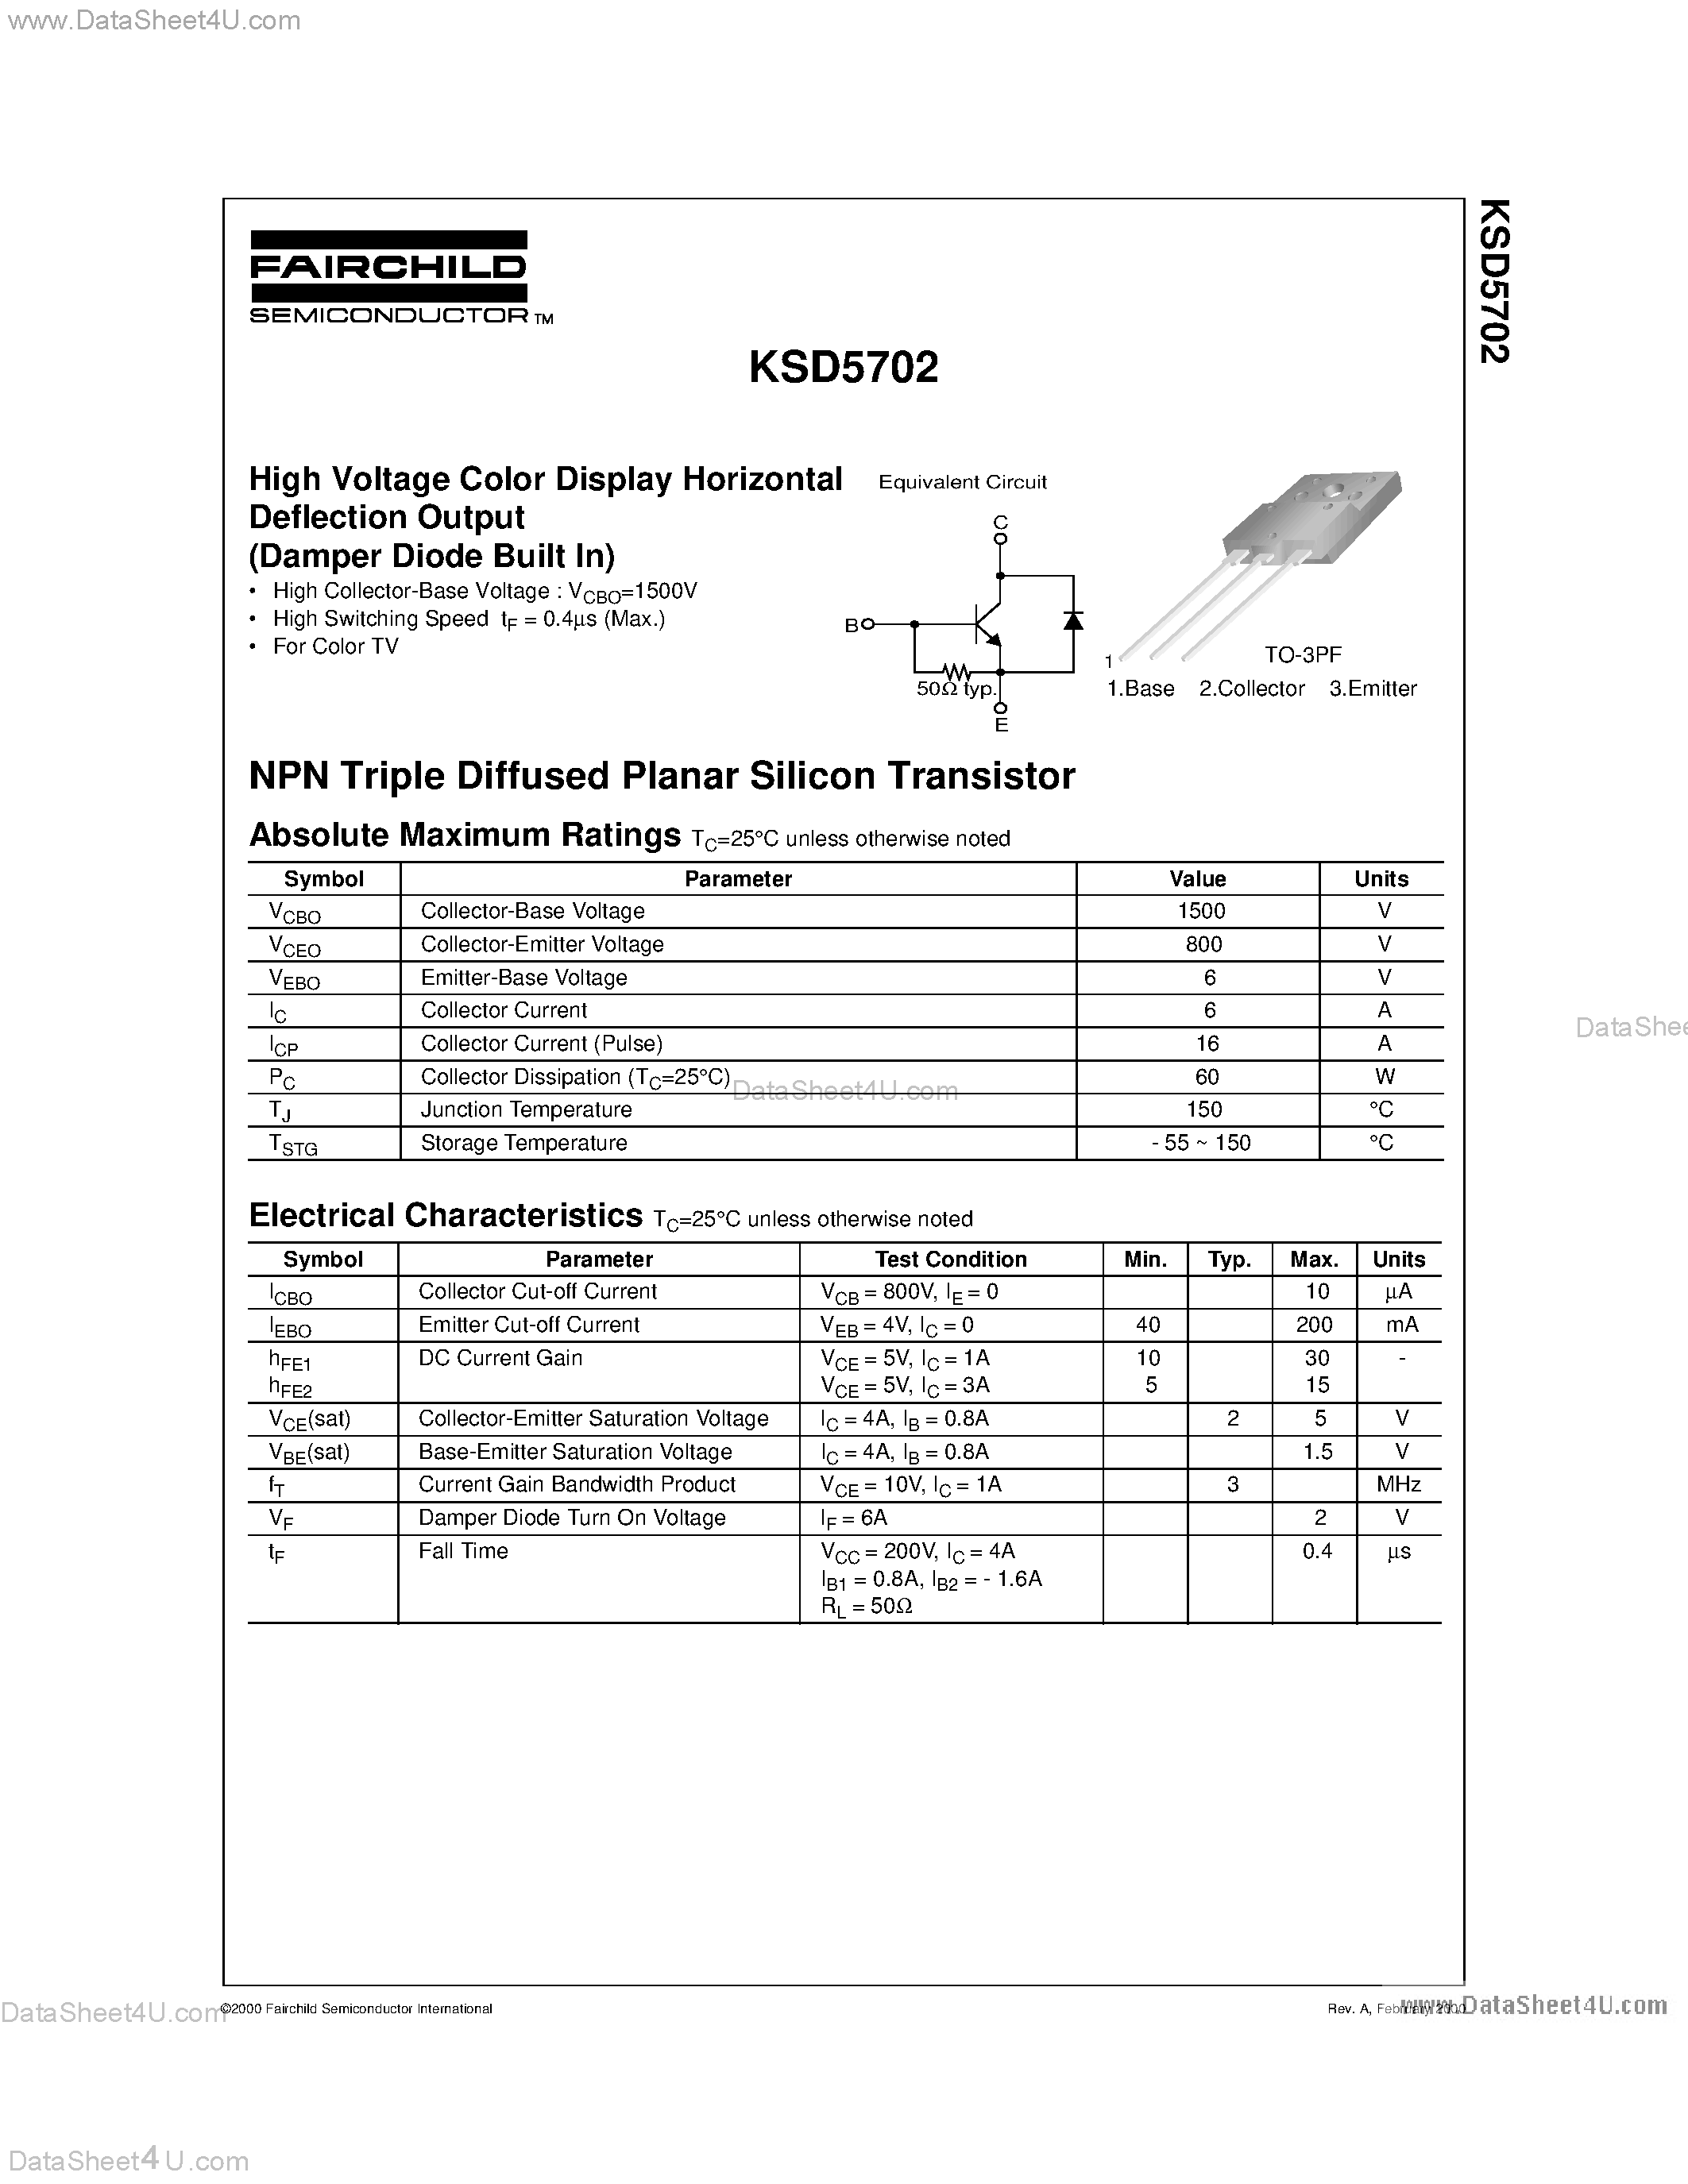 Datasheet KSD5702 - High Voltage Color Display Horizontal Deflection Output page 1